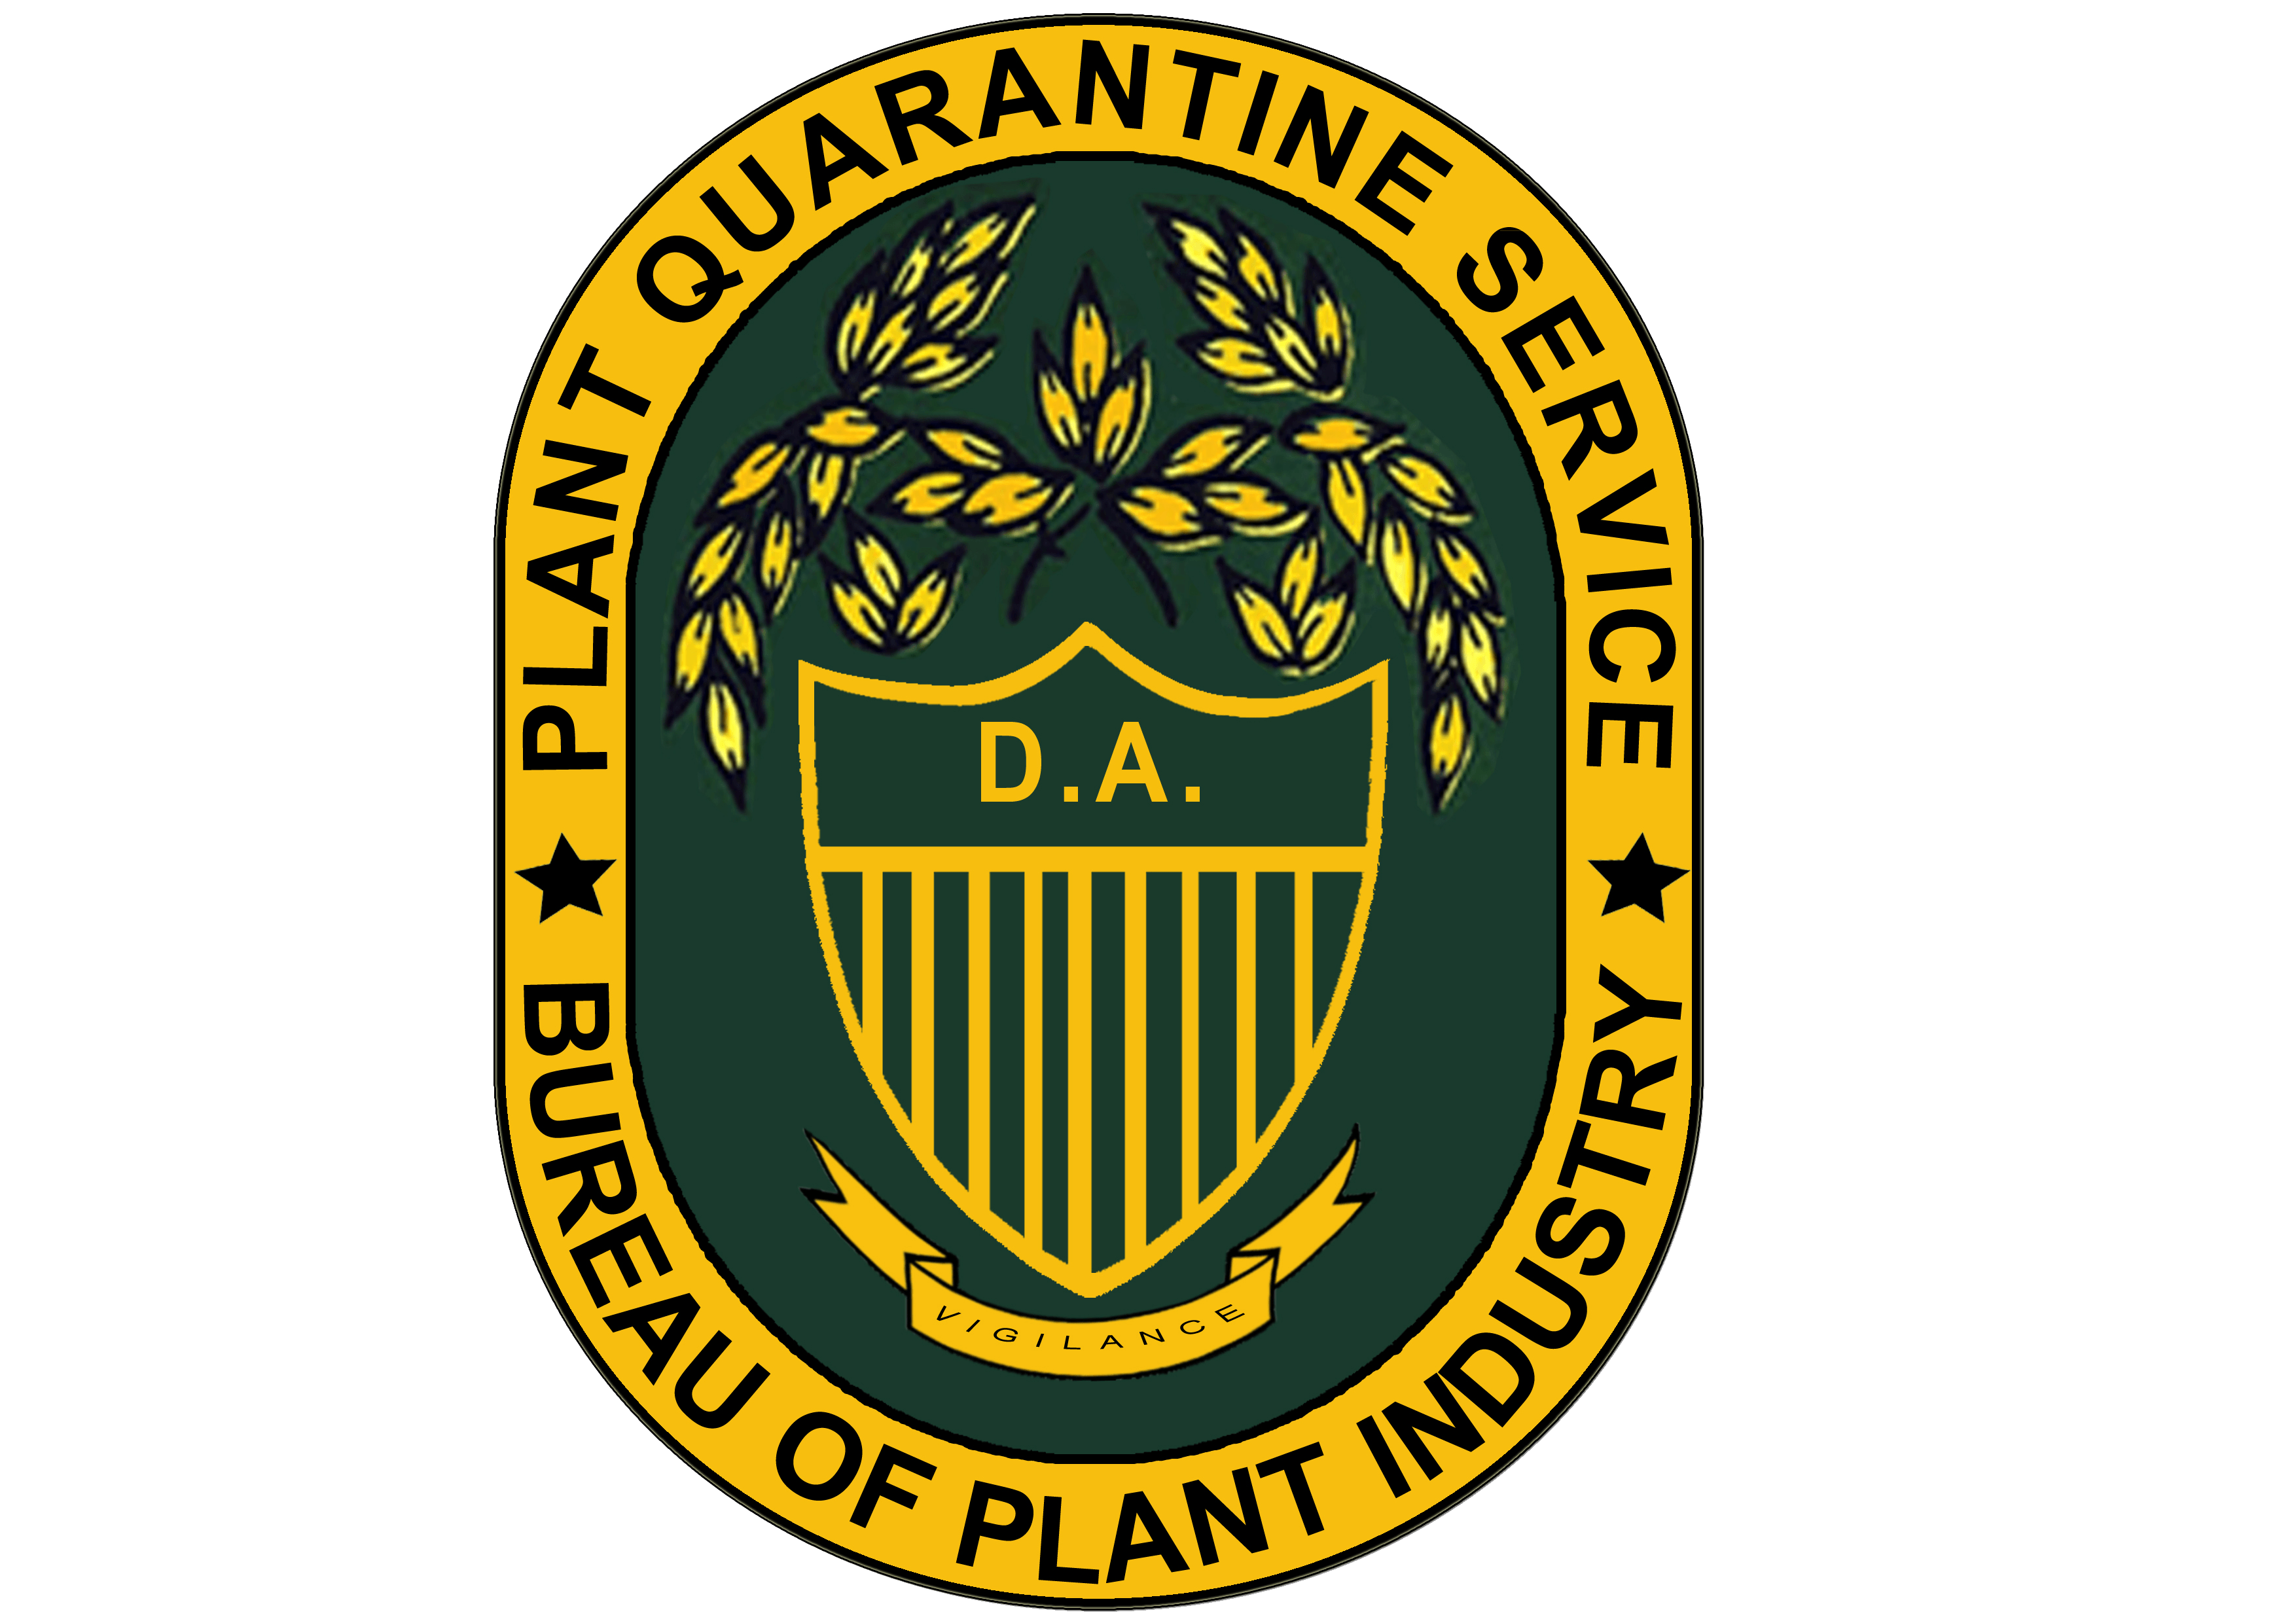 Quarantine Logo - NATIONAL PLANT QUARANTINE SERVICES DIVISION